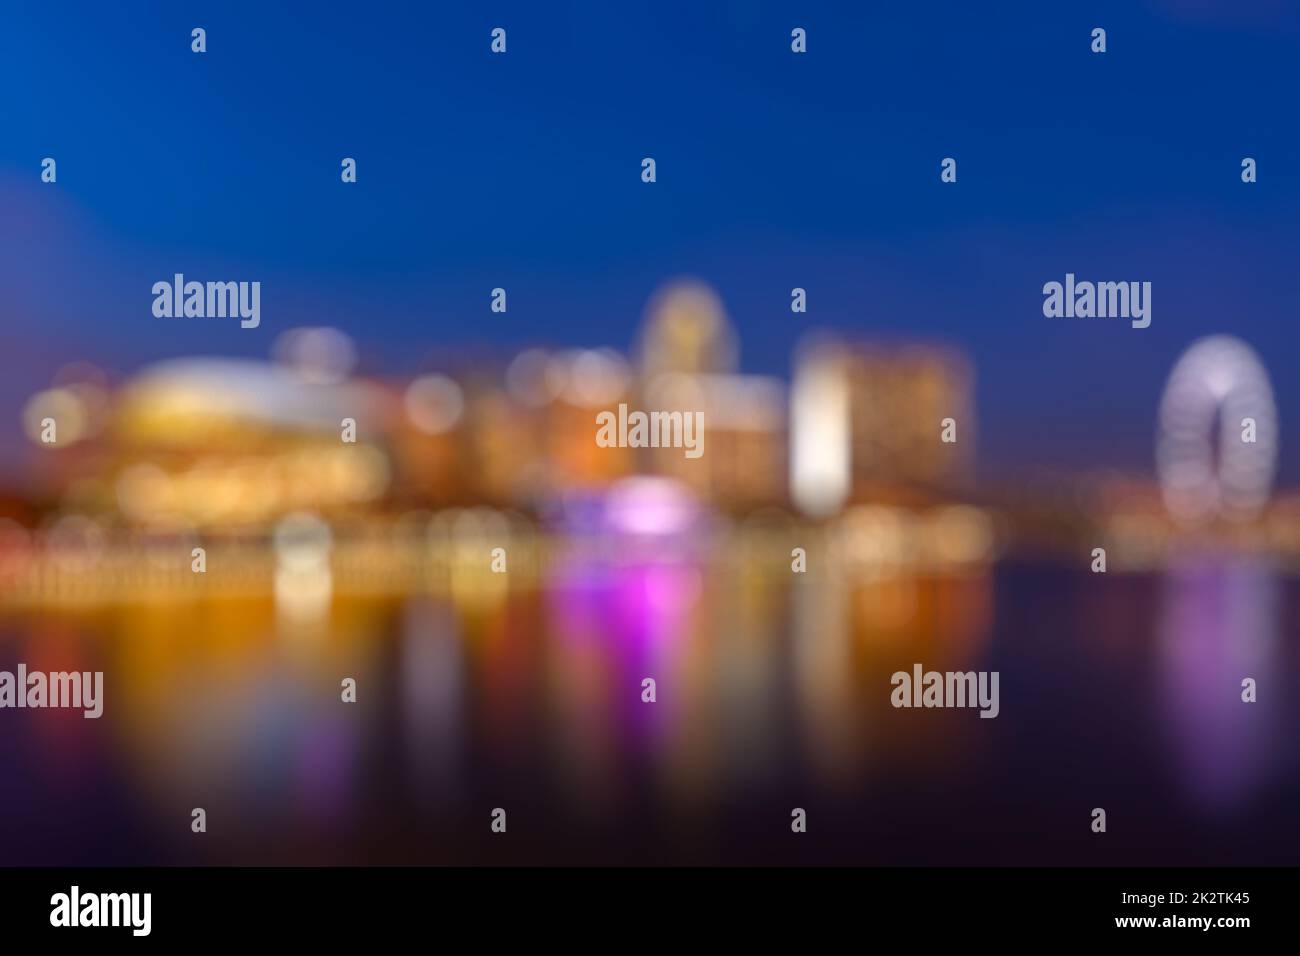 Modern city defocused blurred background Stock Photo